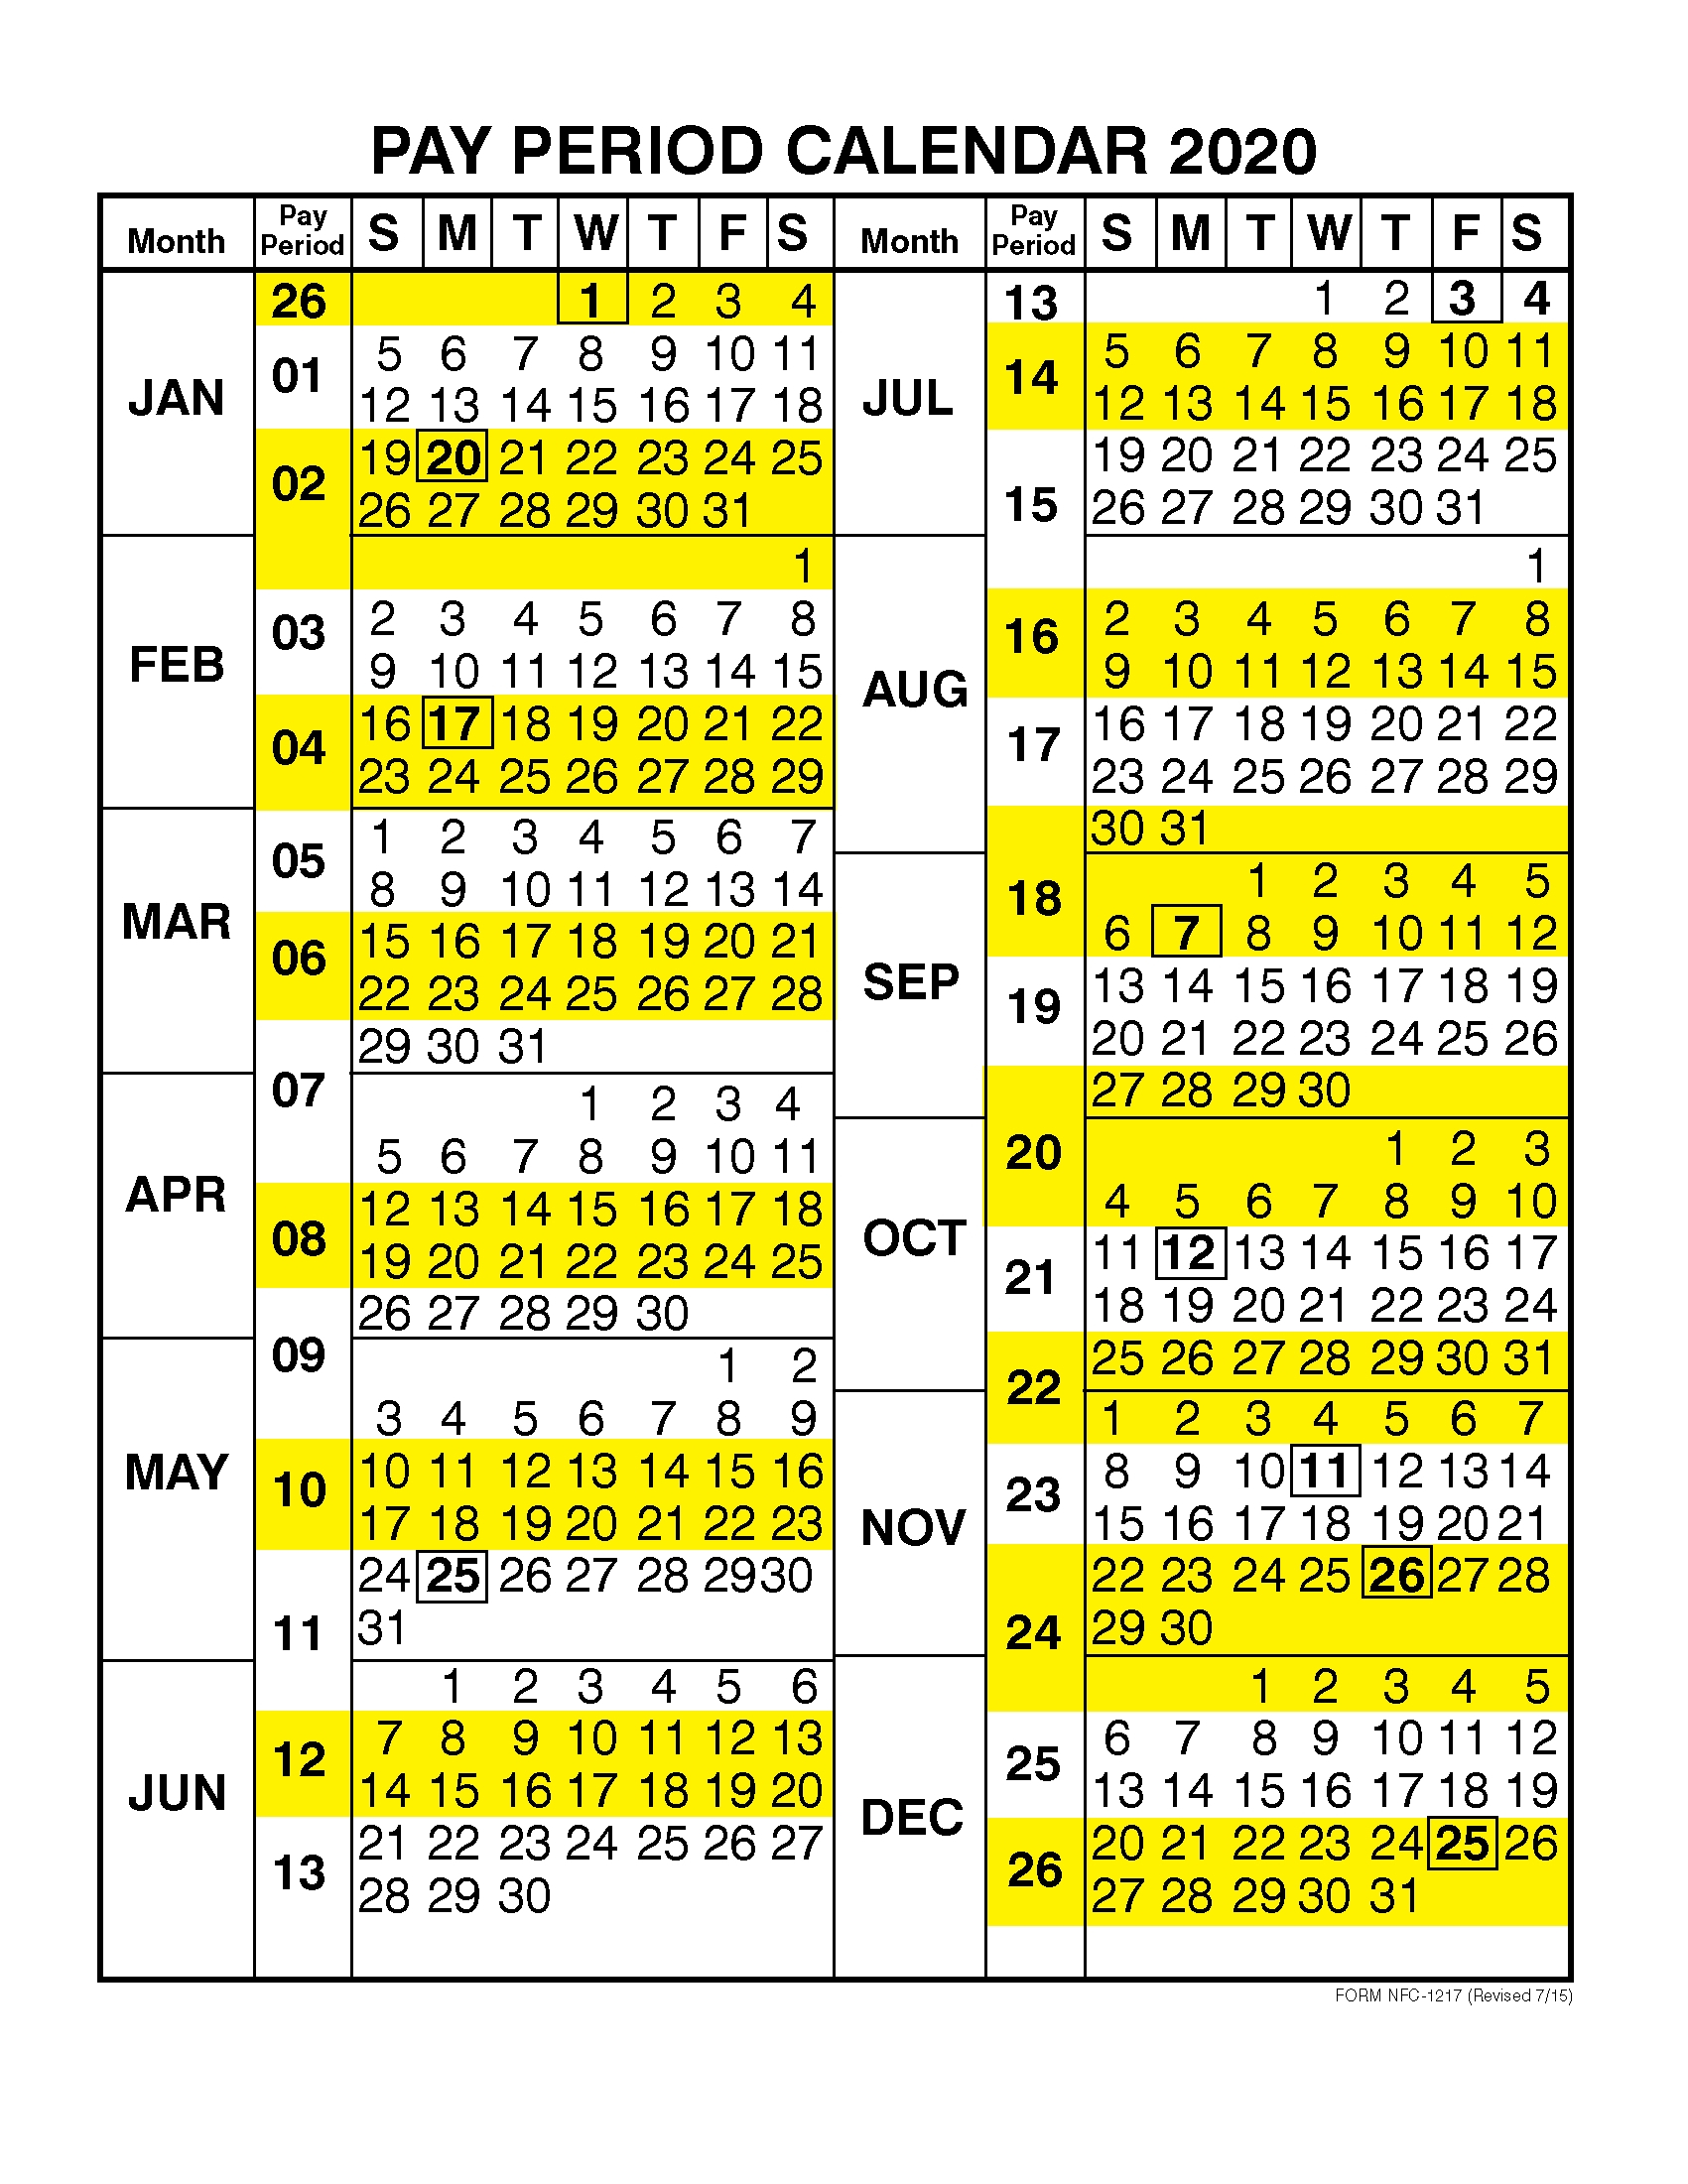 Federal Civilian Pay Calendar 2020 - Calendar Inspiration